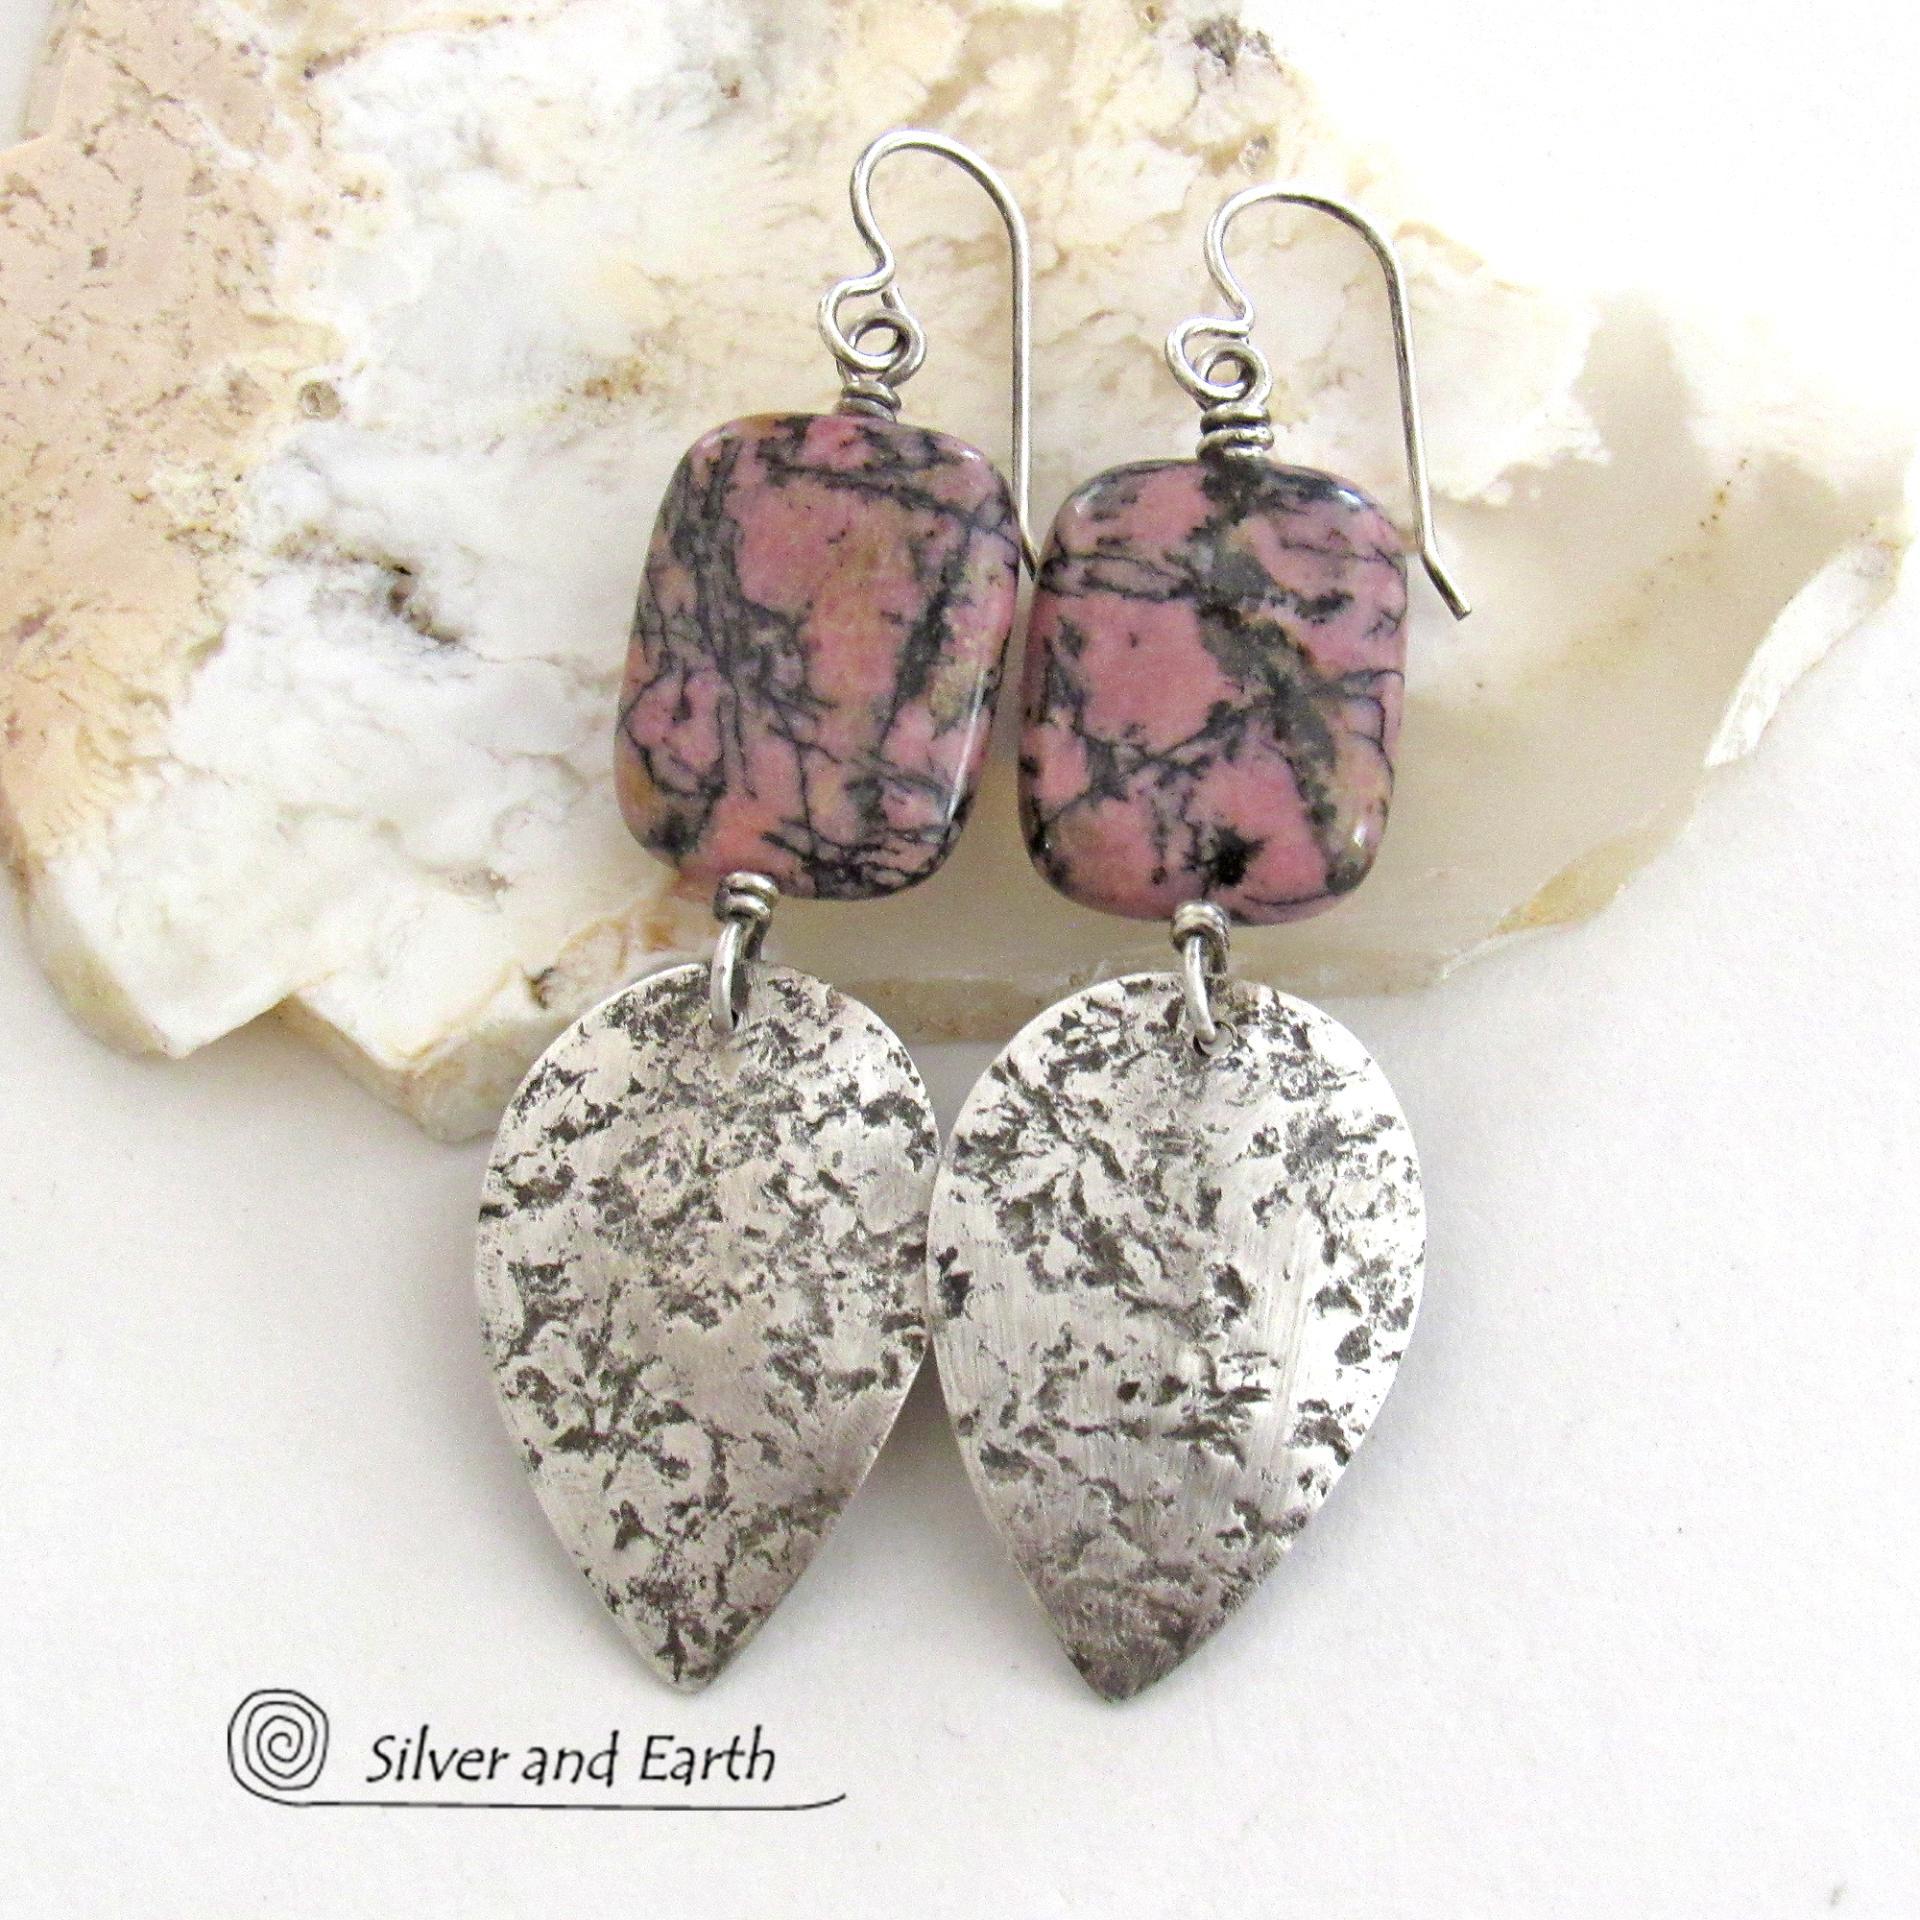 Pink and Black Rhodonite Natural Gemstone Earrings with Sterling Silver Dangles